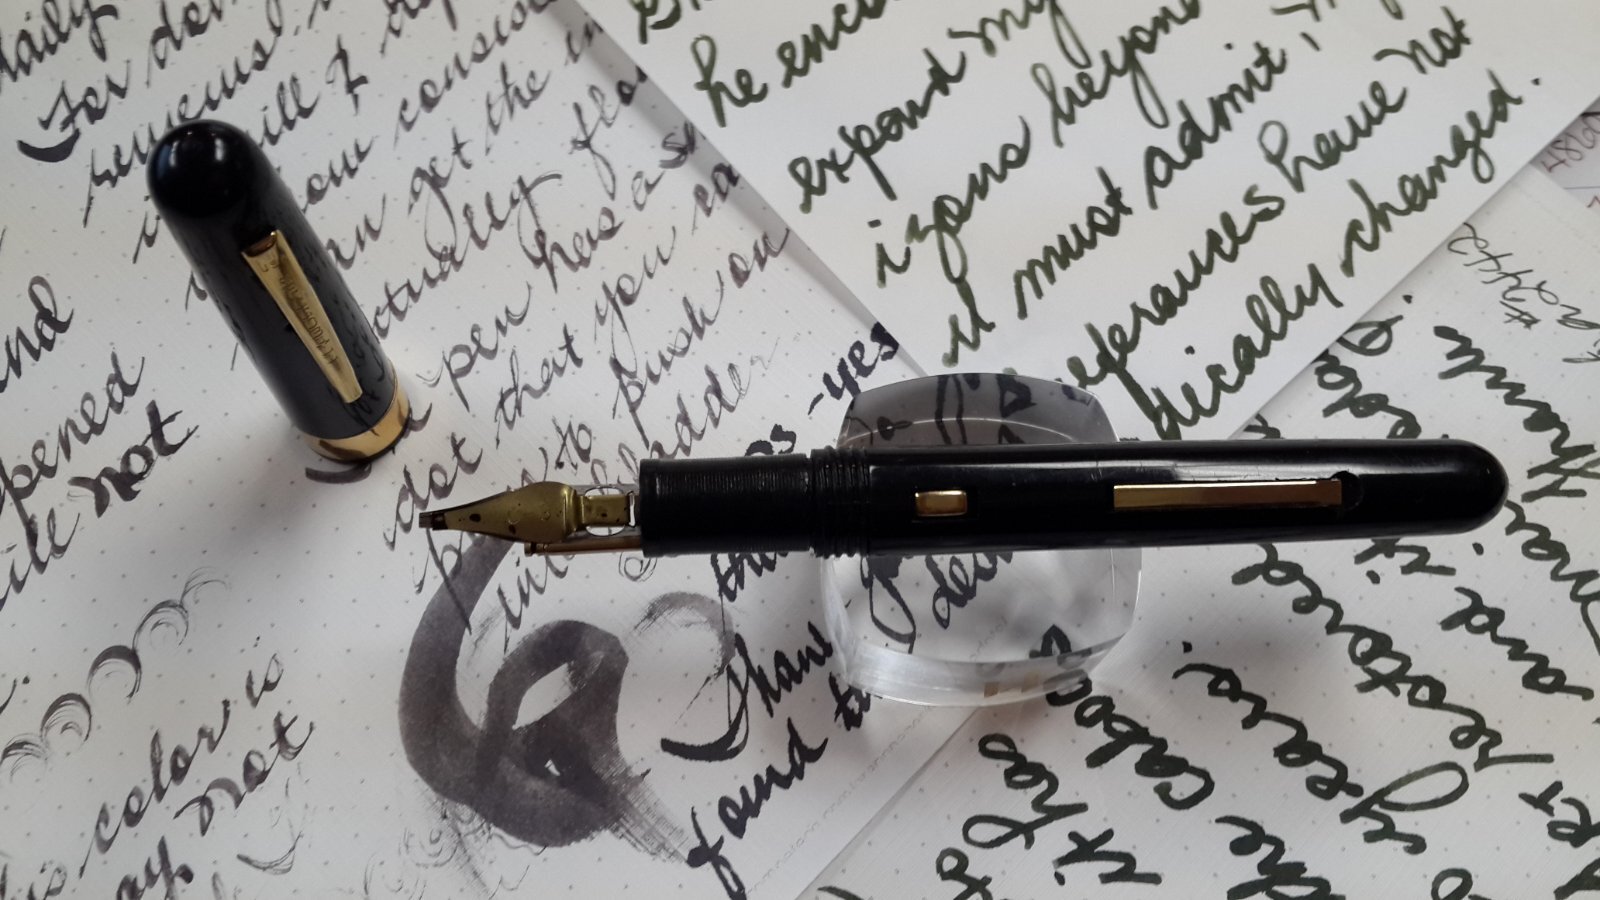 Speedball Signature Series Pen & Ink Calligraphy Set | Black